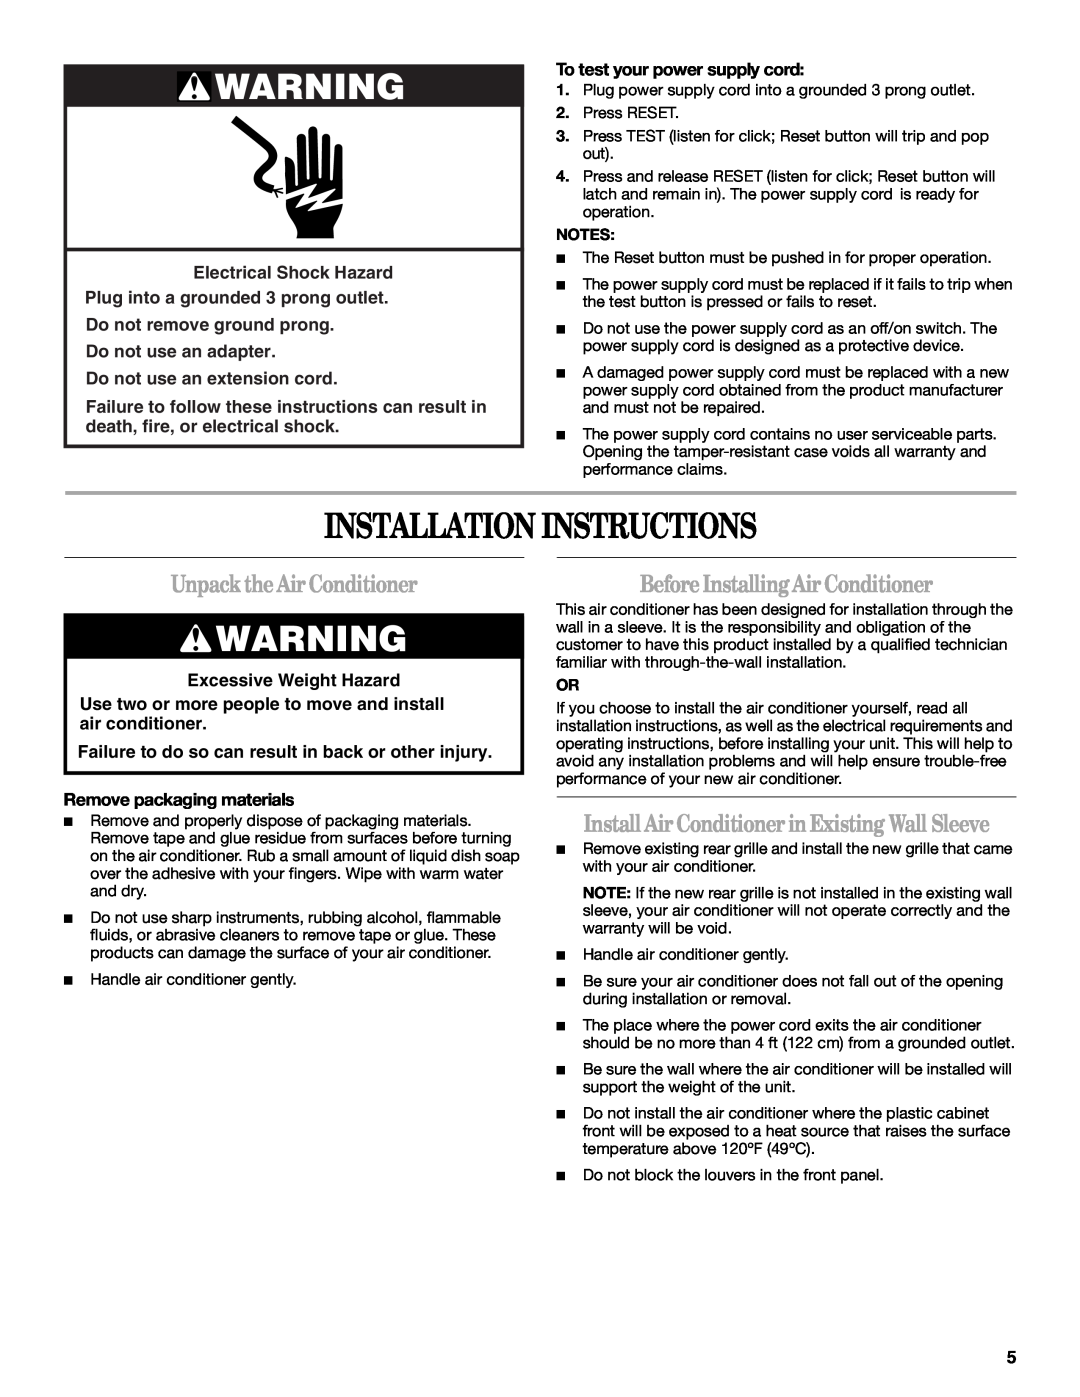 Whirlpool 819041994, 1188177 manual Installation Instructions, UnpacktheAir Conditioner, BeforeInstallingAir Conditioner 